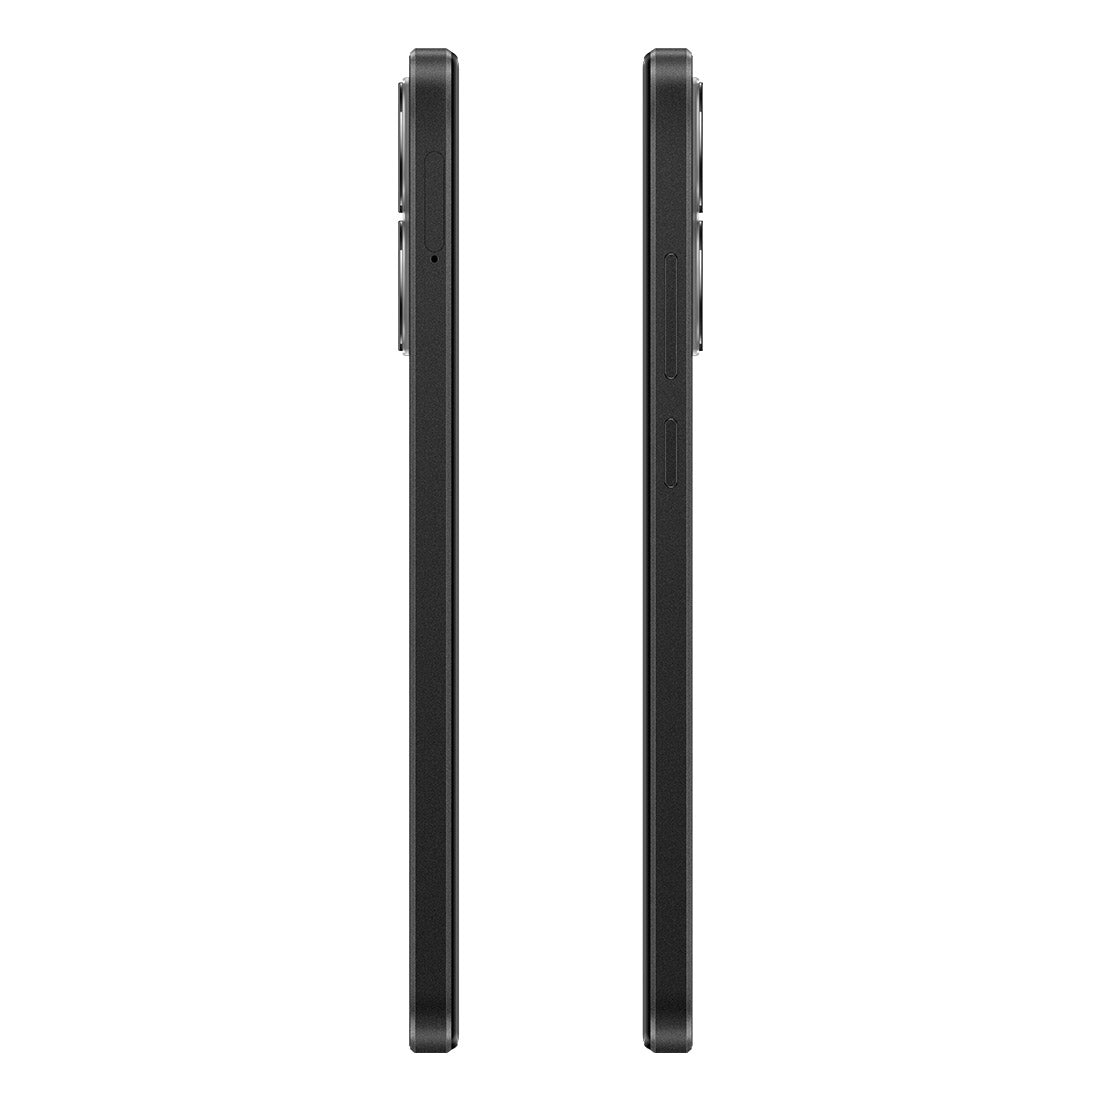 OPPO A78 4G Mist Black (67W SUPERVOOC Charging, 50MP AI Camera, AMOLED Display, Dual Sim Unlocked)